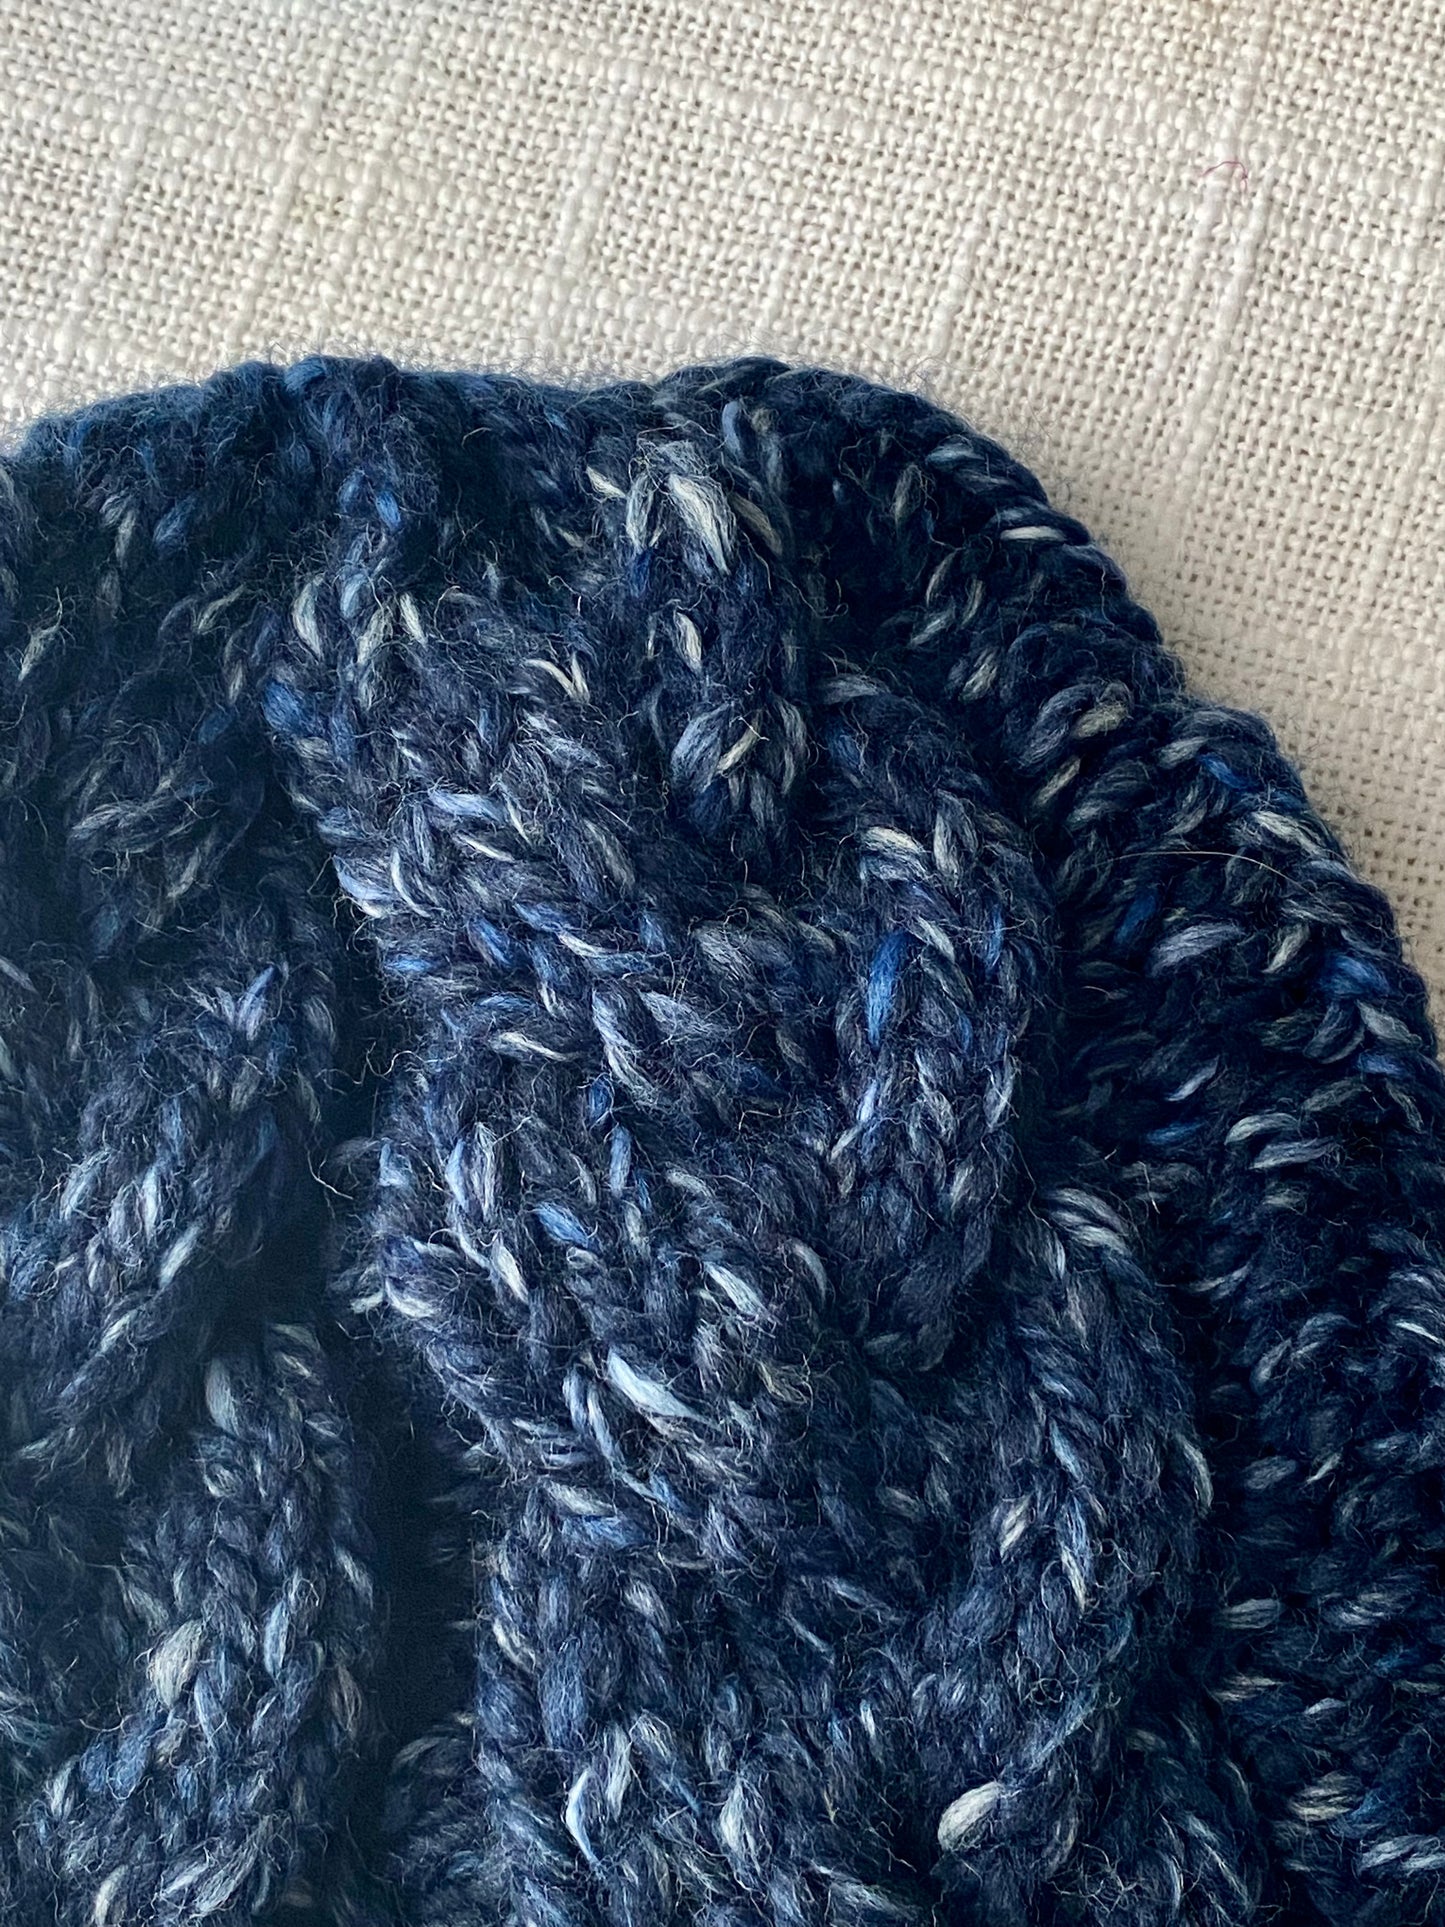 Cozy Cables Hat - Wool Blend Fiber